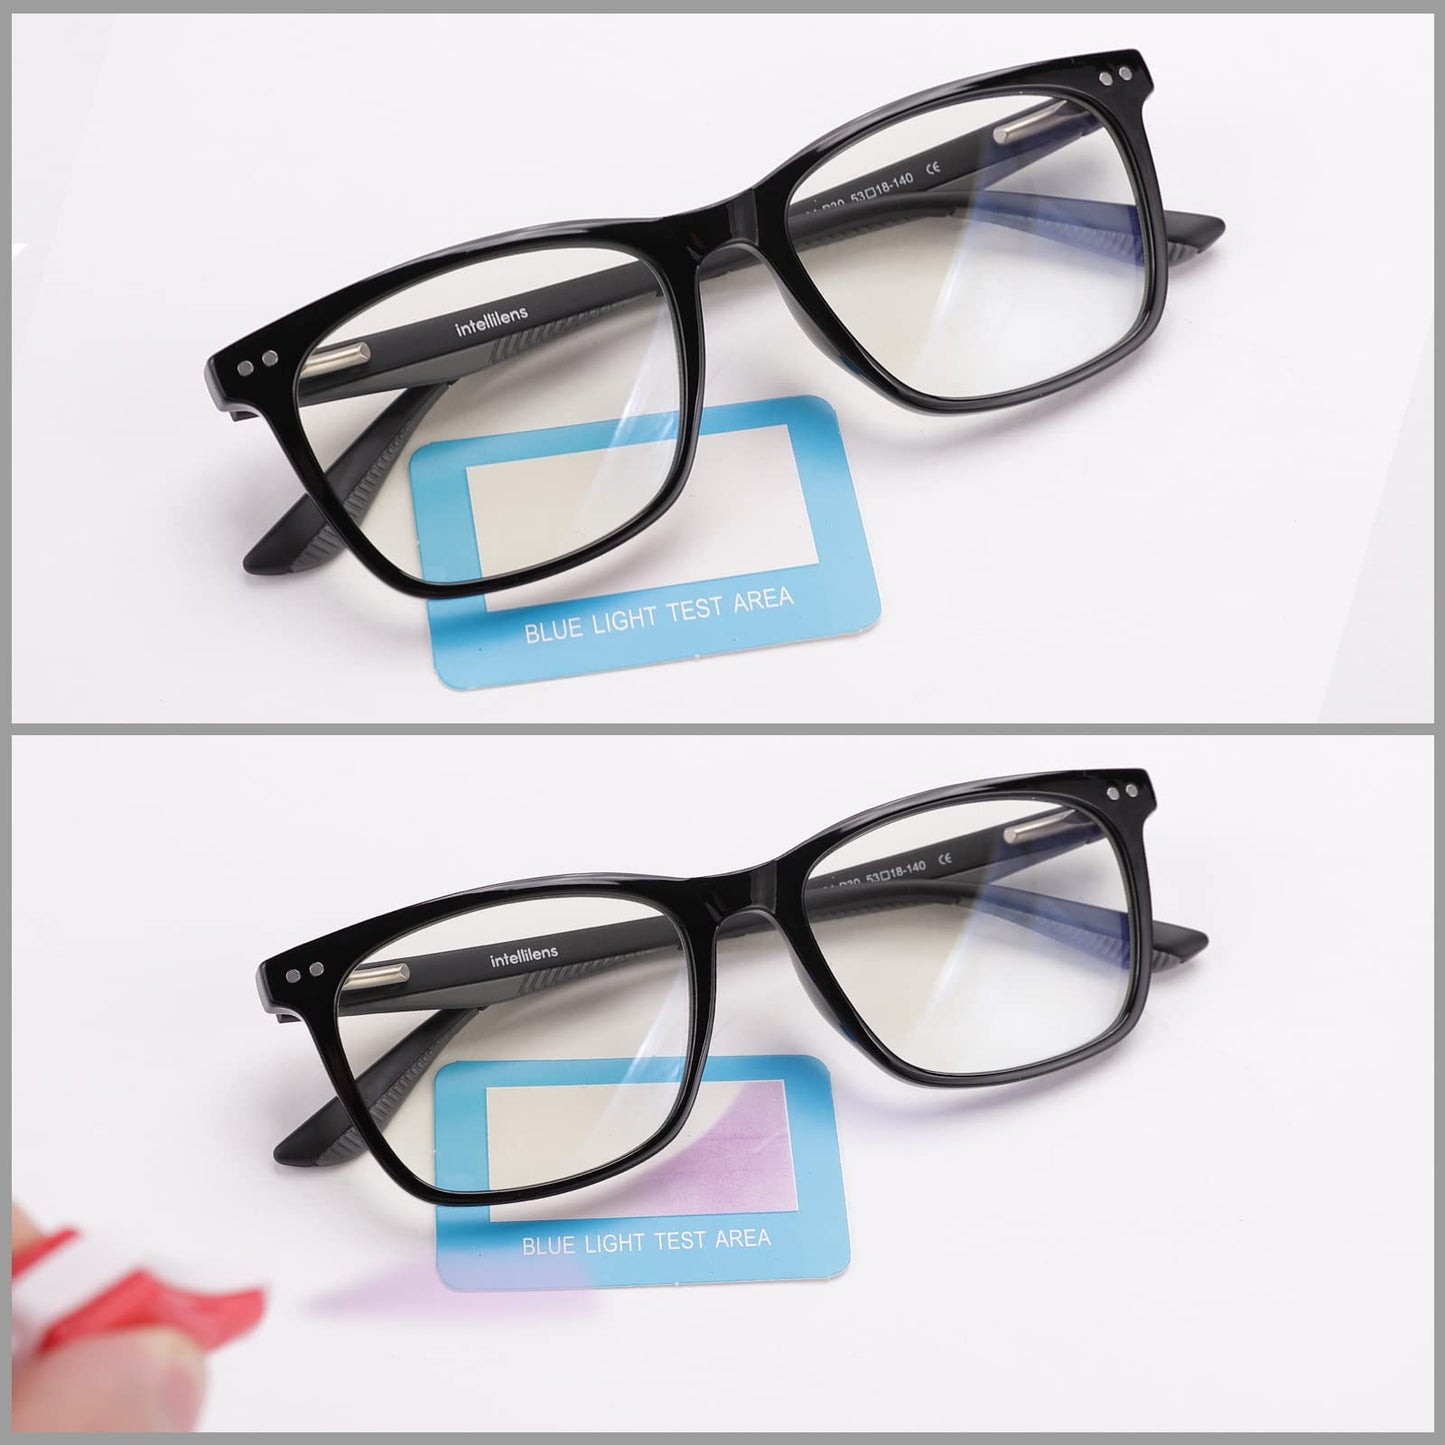 Intellilens  Zero Power Blue Cut Computer Glasses  Anti Glare Lightweight  Blocks Harmful Rays  UV Protection Specs  For Men  Women  Black  Square Medium